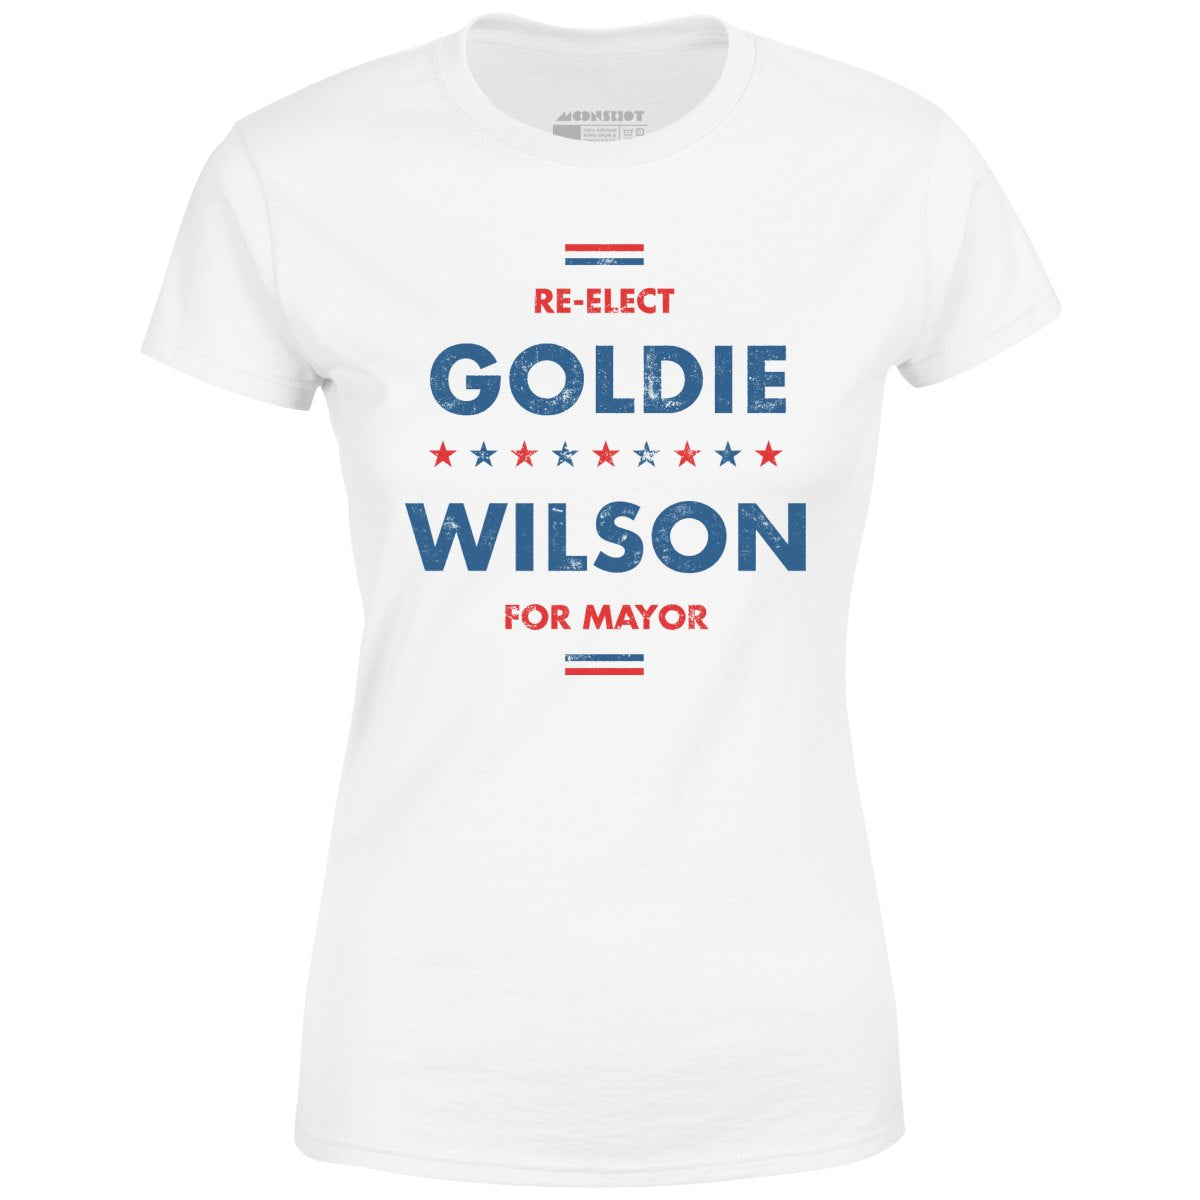 Goldie Wilson - Women's T-Shirt